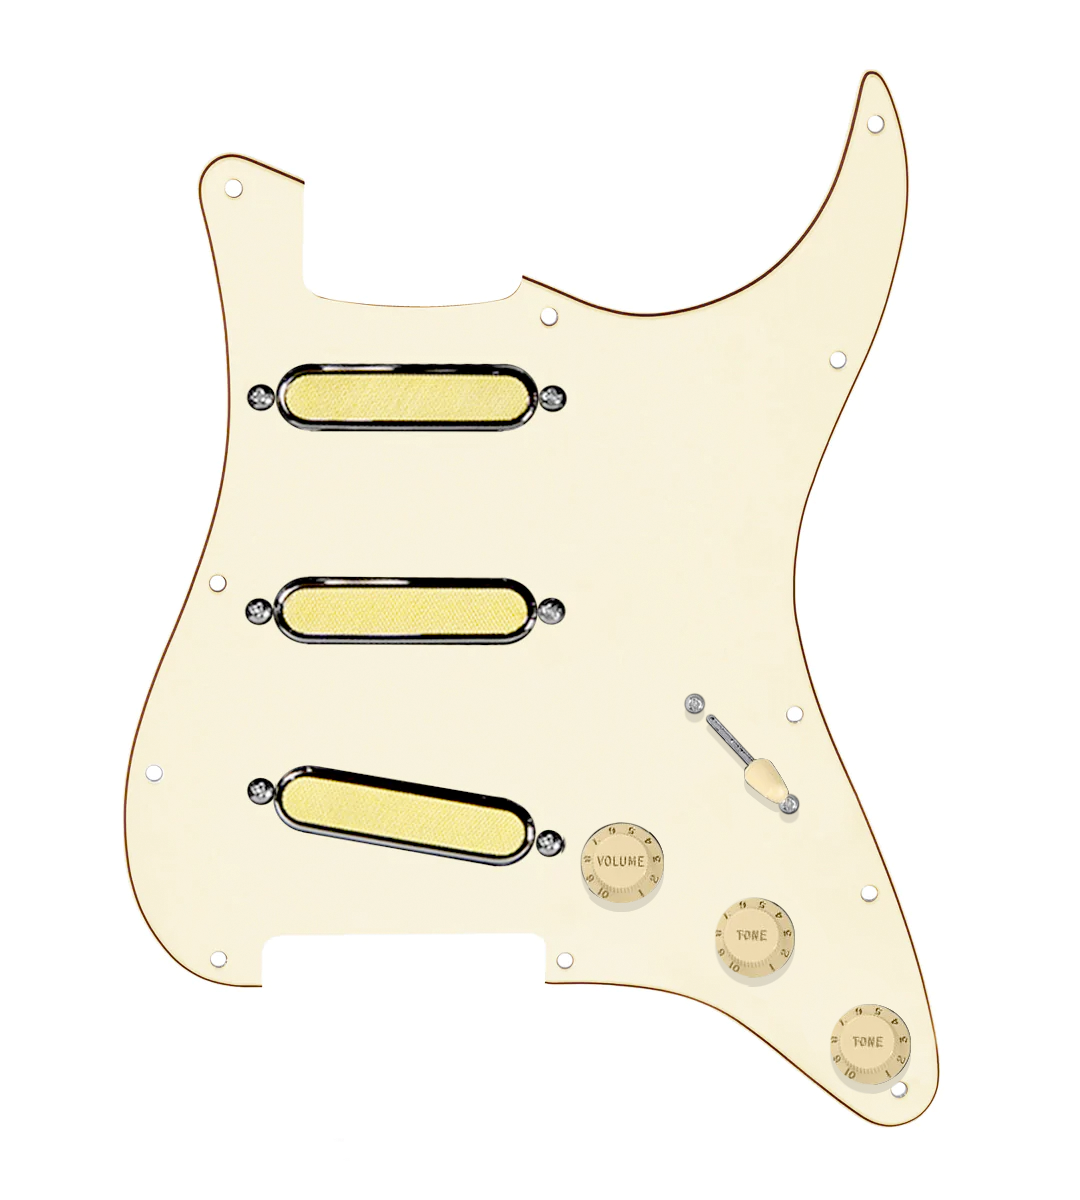 Gold Foil Loaded Pickguard for Stratocasters® - SLPG-GLDFL-AW-AWPG-S5W